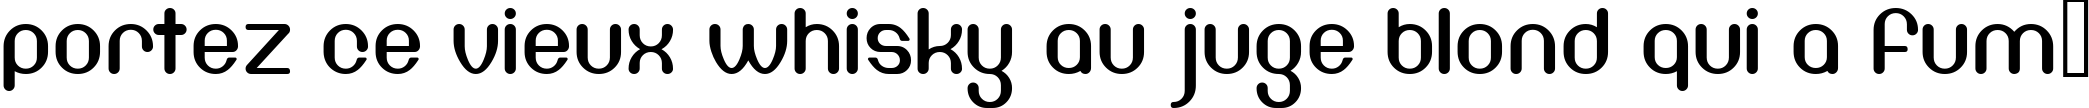 Пример написания шрифтом DF667  Chlorine текста на французском